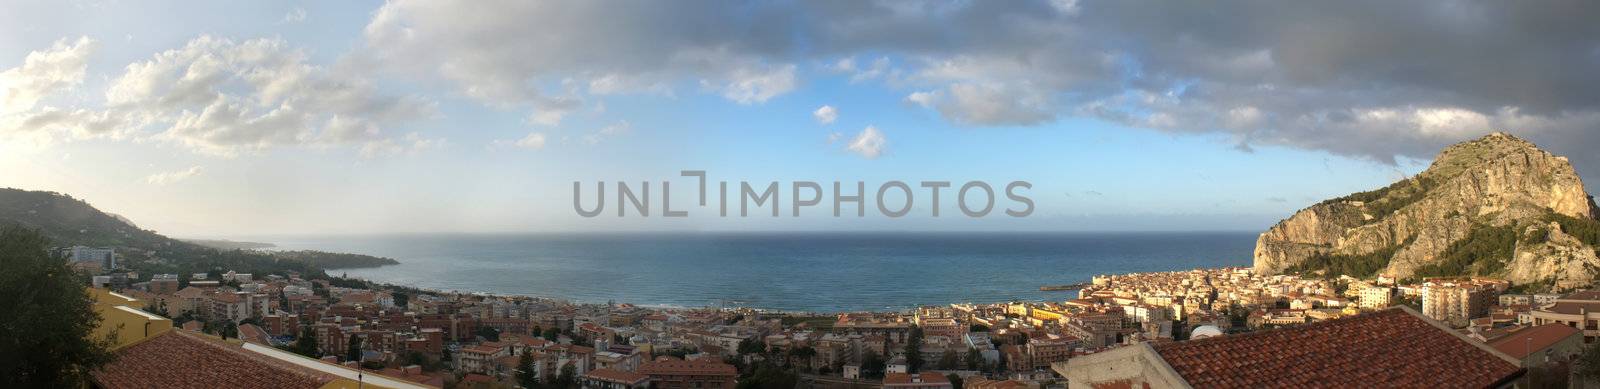 Panoramic view of the Cefalù by gandolfocannatella